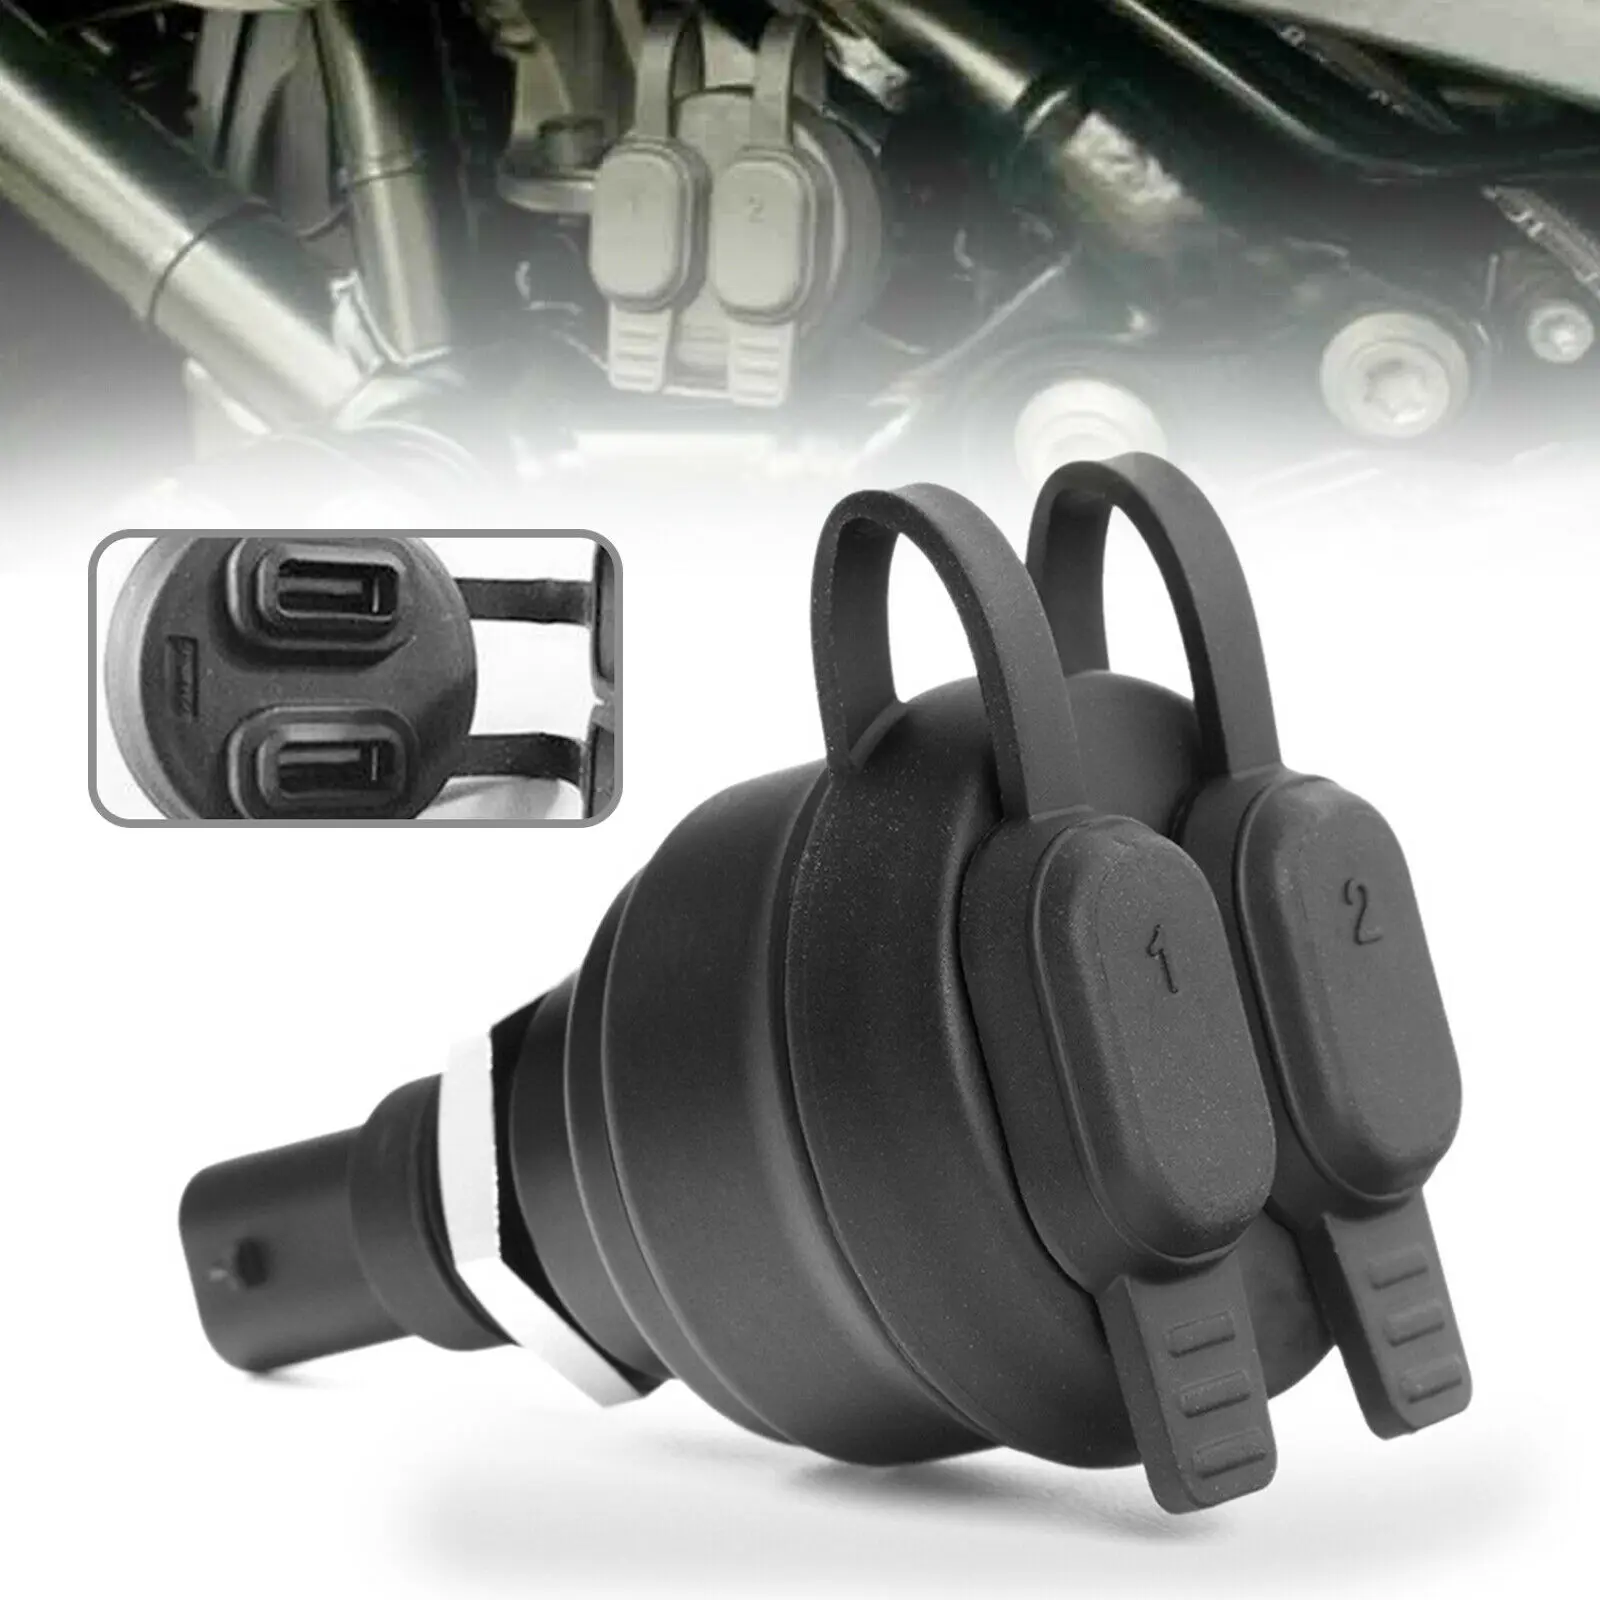 

Motorcycle 5V USB Charger Dual USB Port Power Adapter For BMW R1200GS R1250GS R1250RT R1200RT R NineT K1600GT K1600GTL K1300S